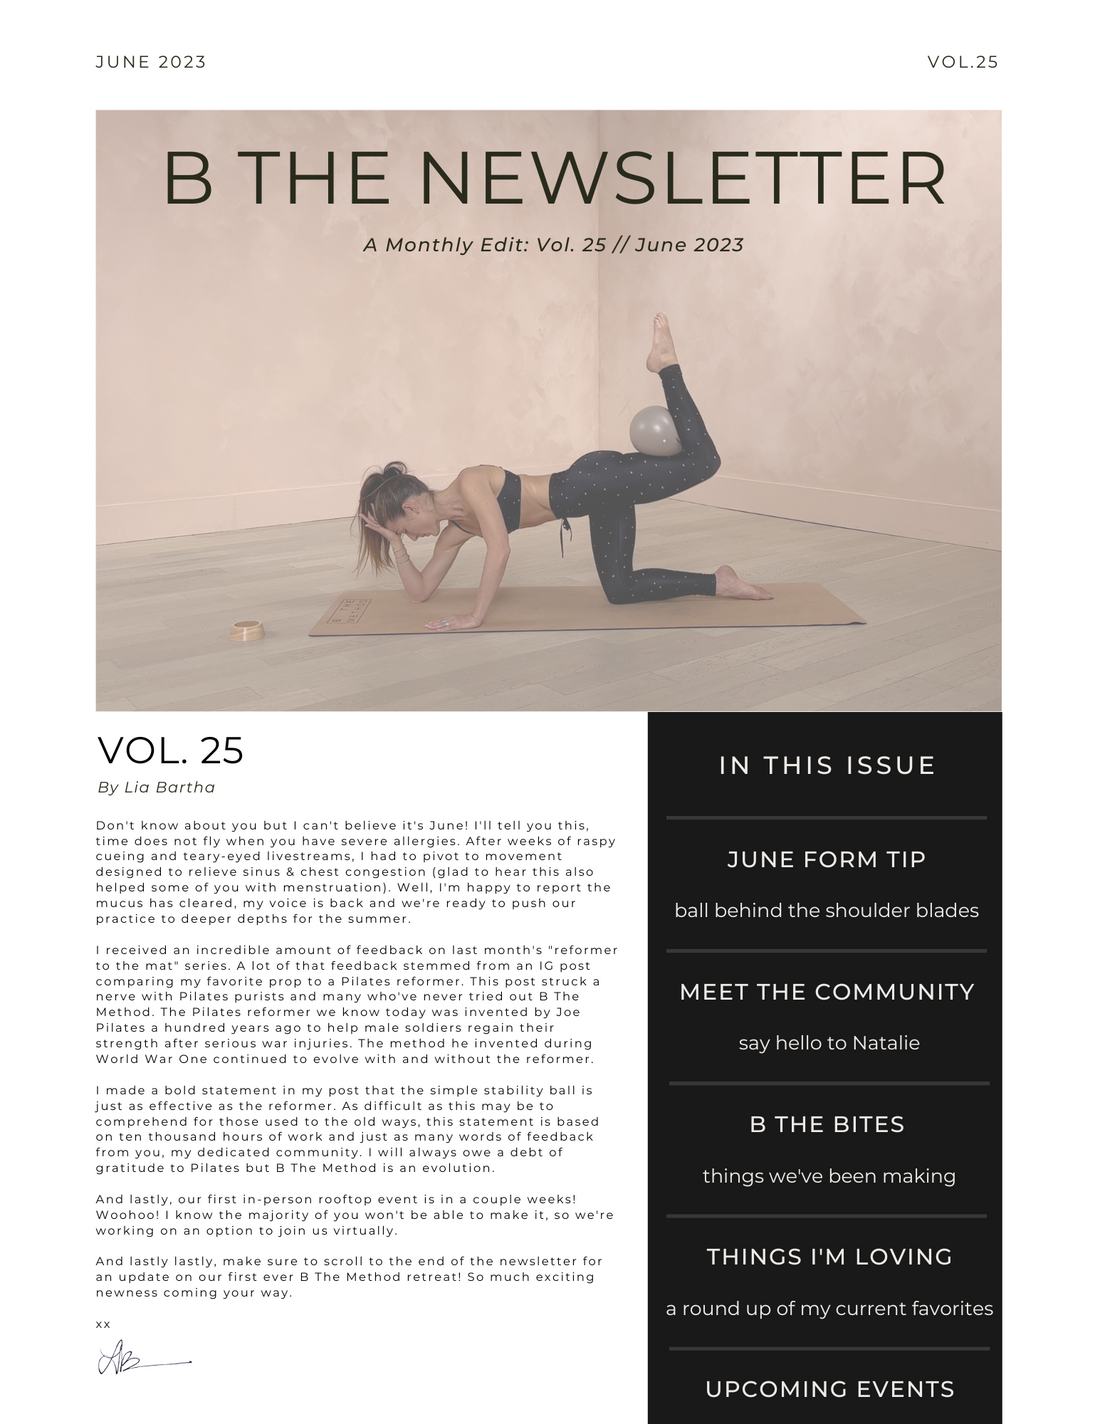 Newsletter Vol.25